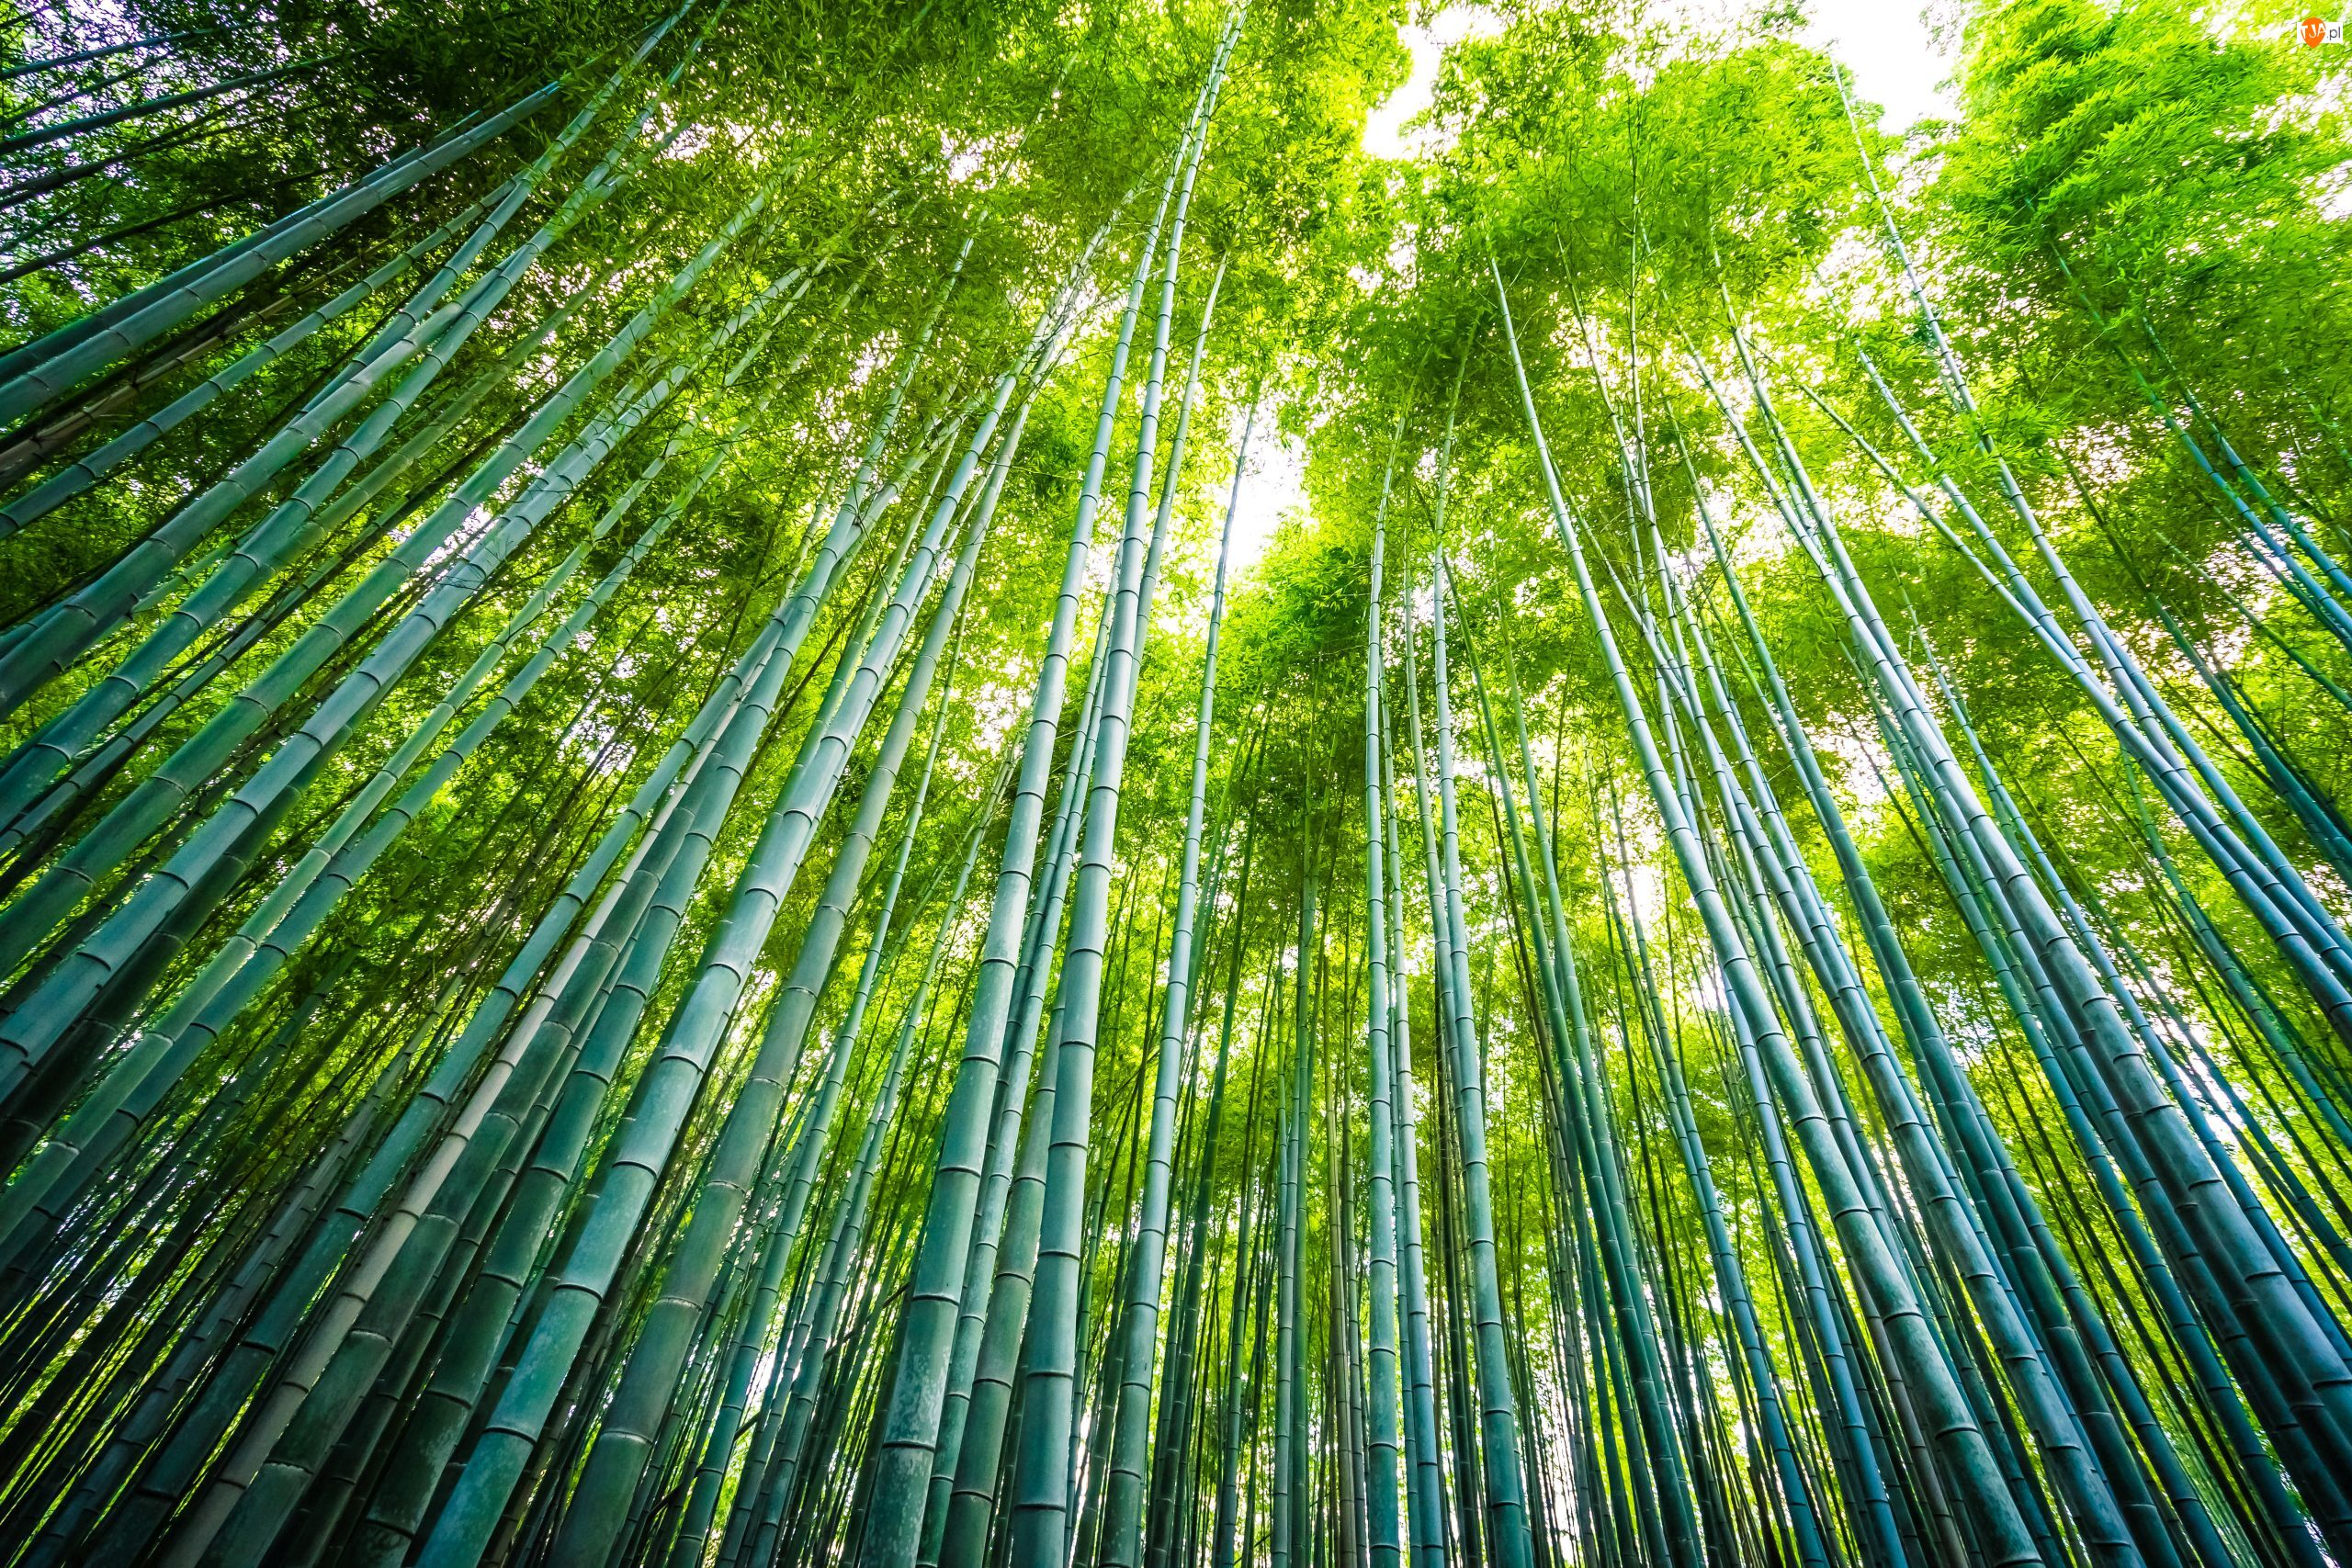 Las, Drzewa, Bambusy